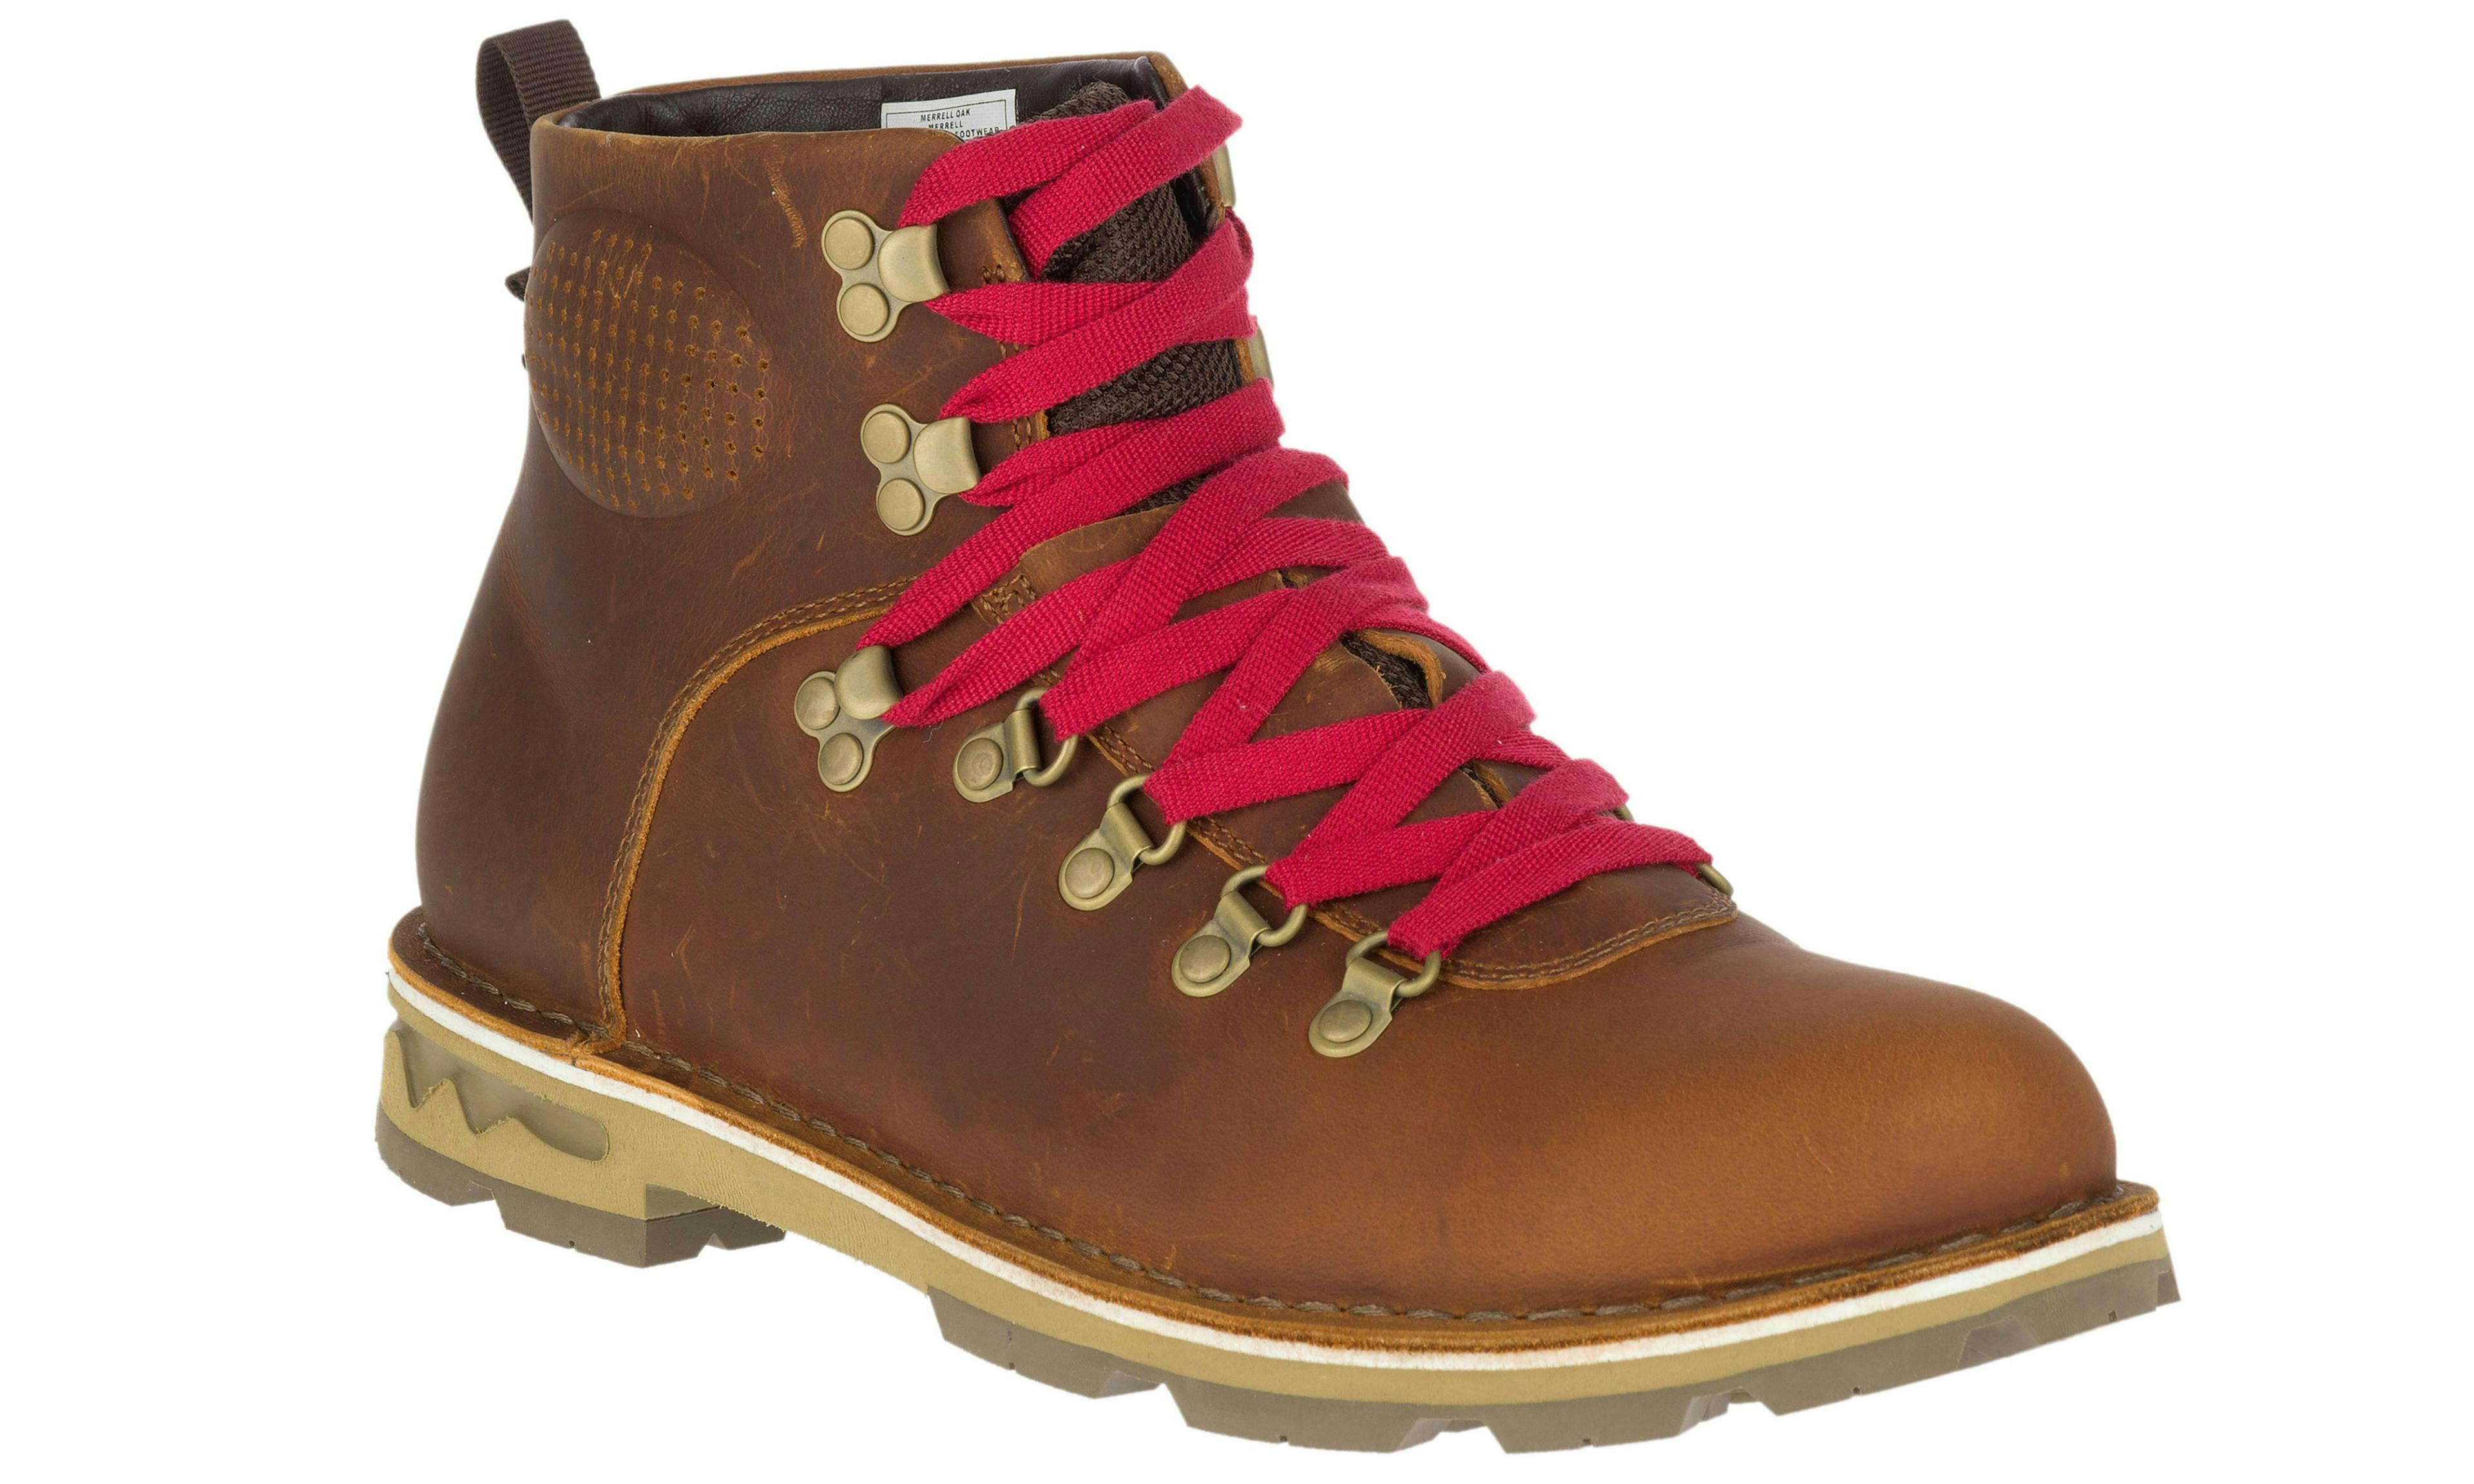 Merrell Sugarbush Braden leather waterproof boots